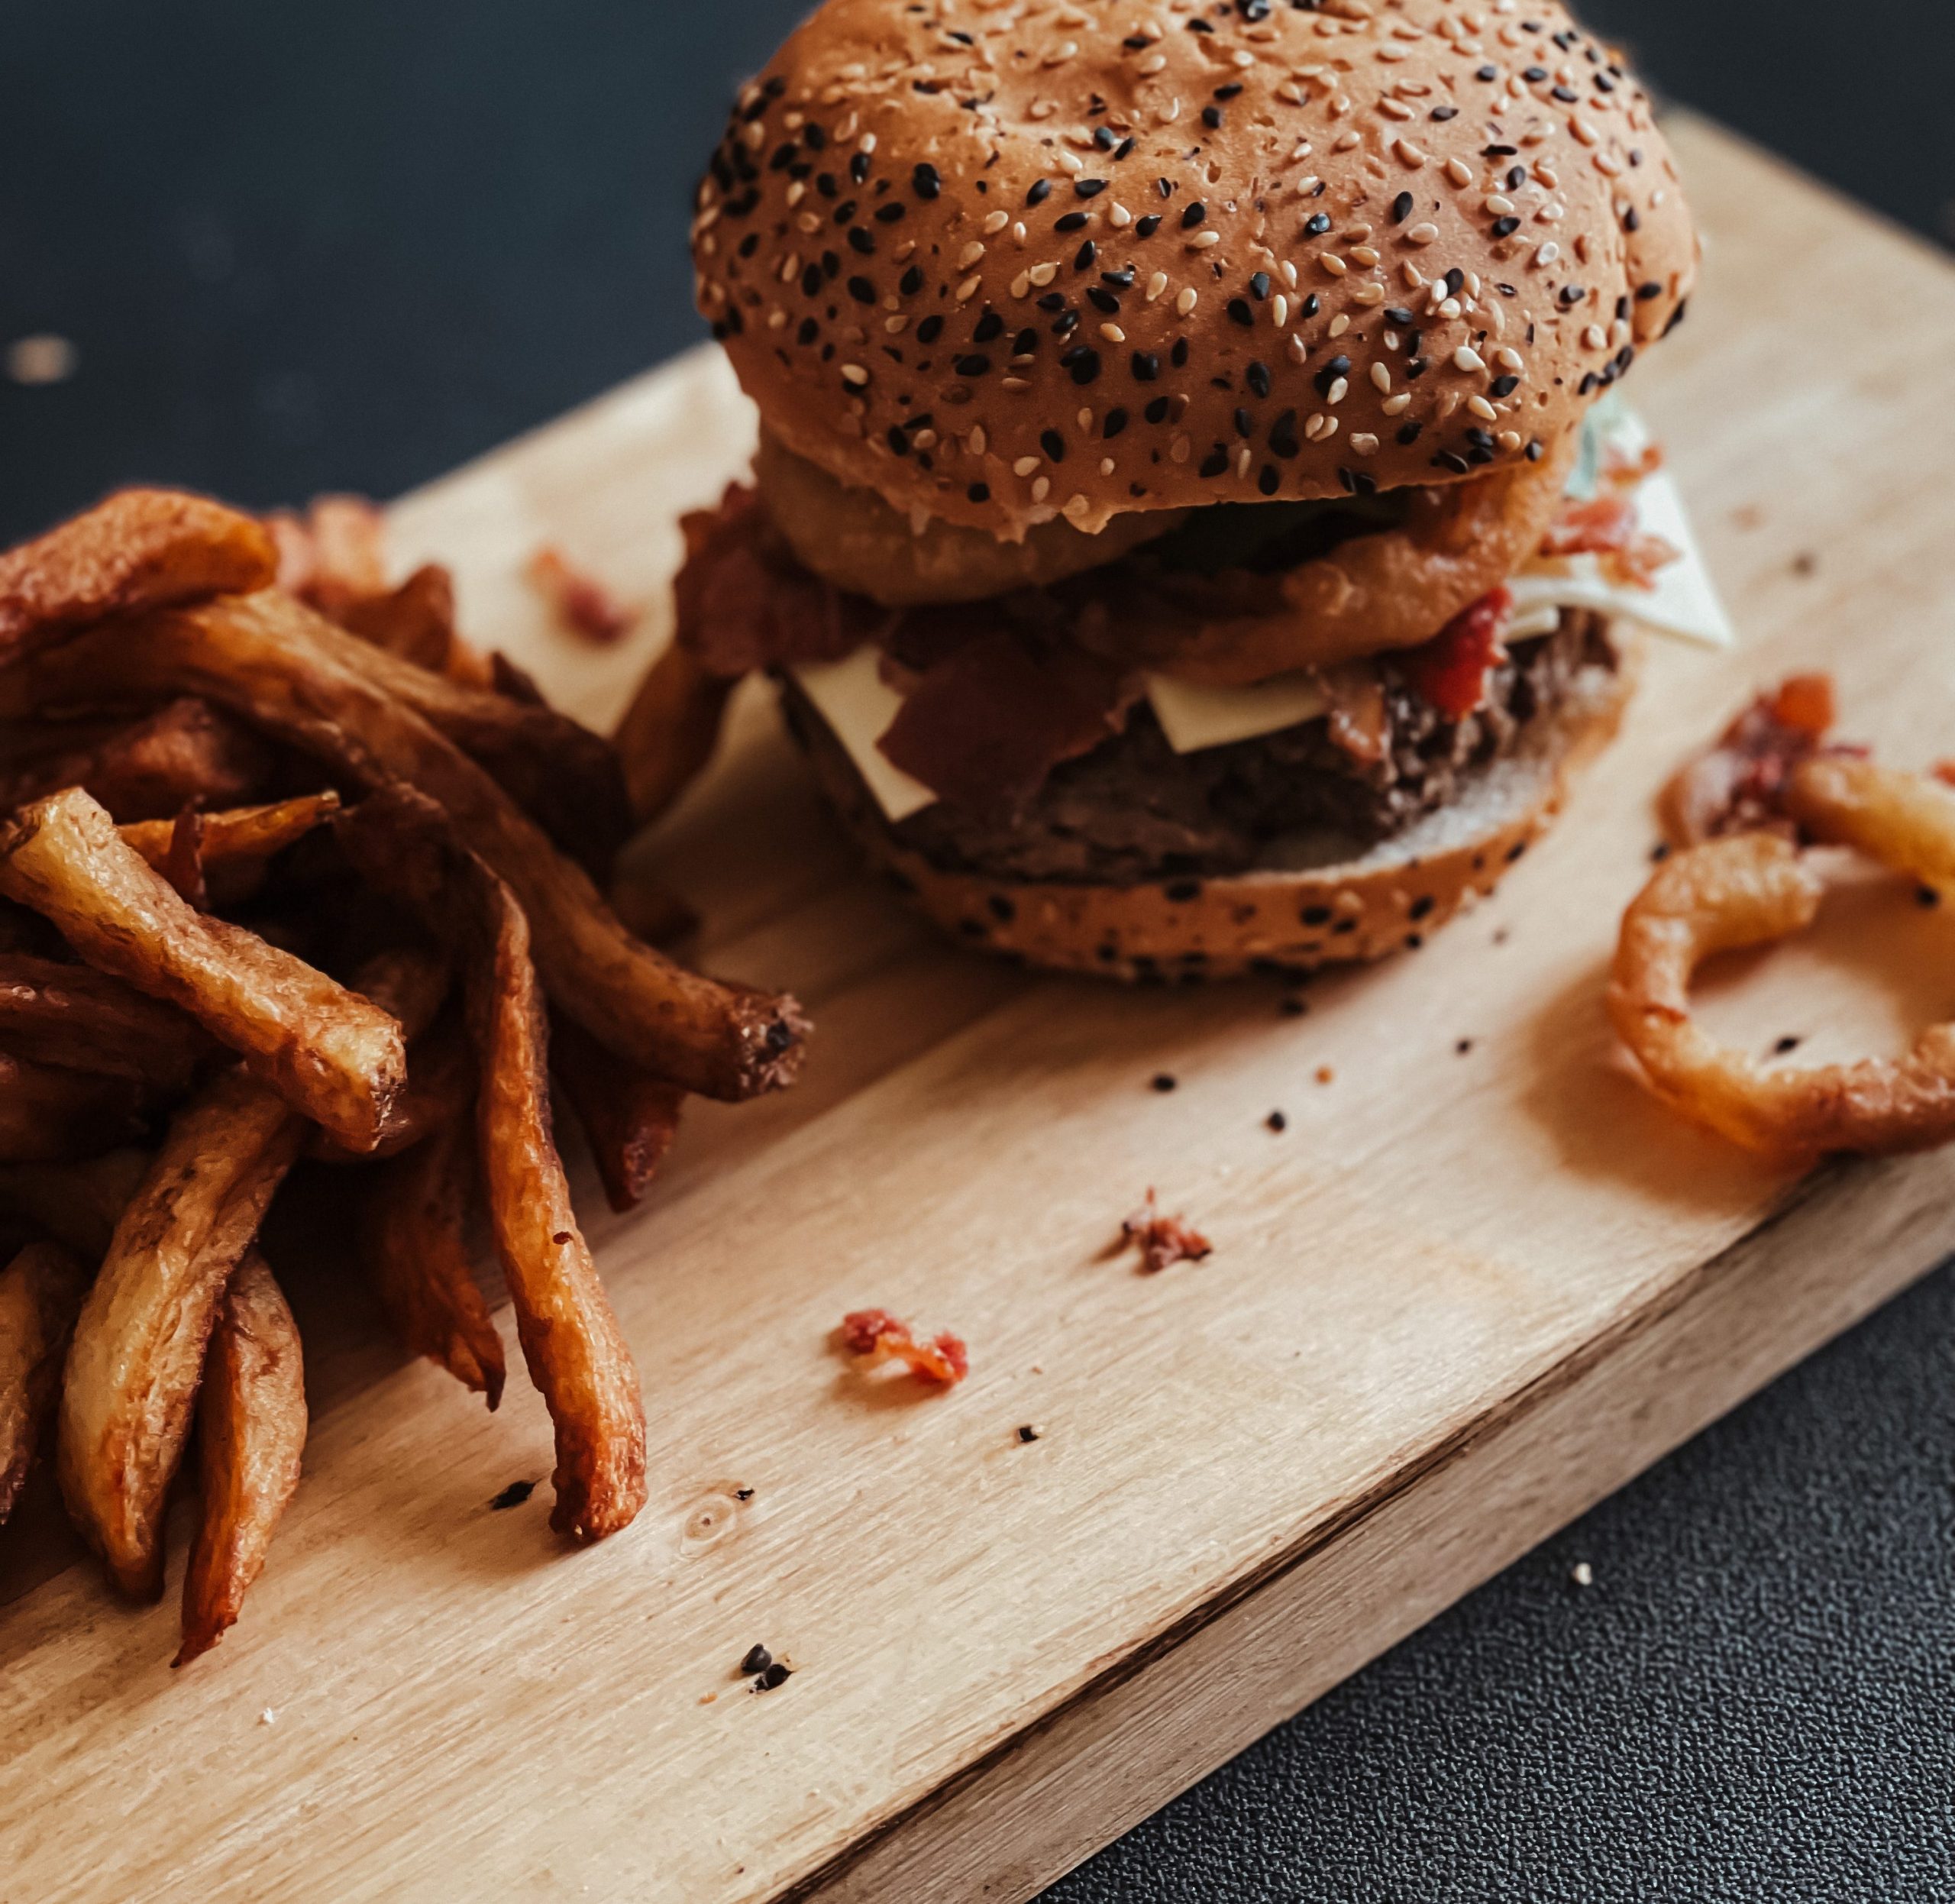 Burger-gourmand-scaled-aspect-ratio-264-257